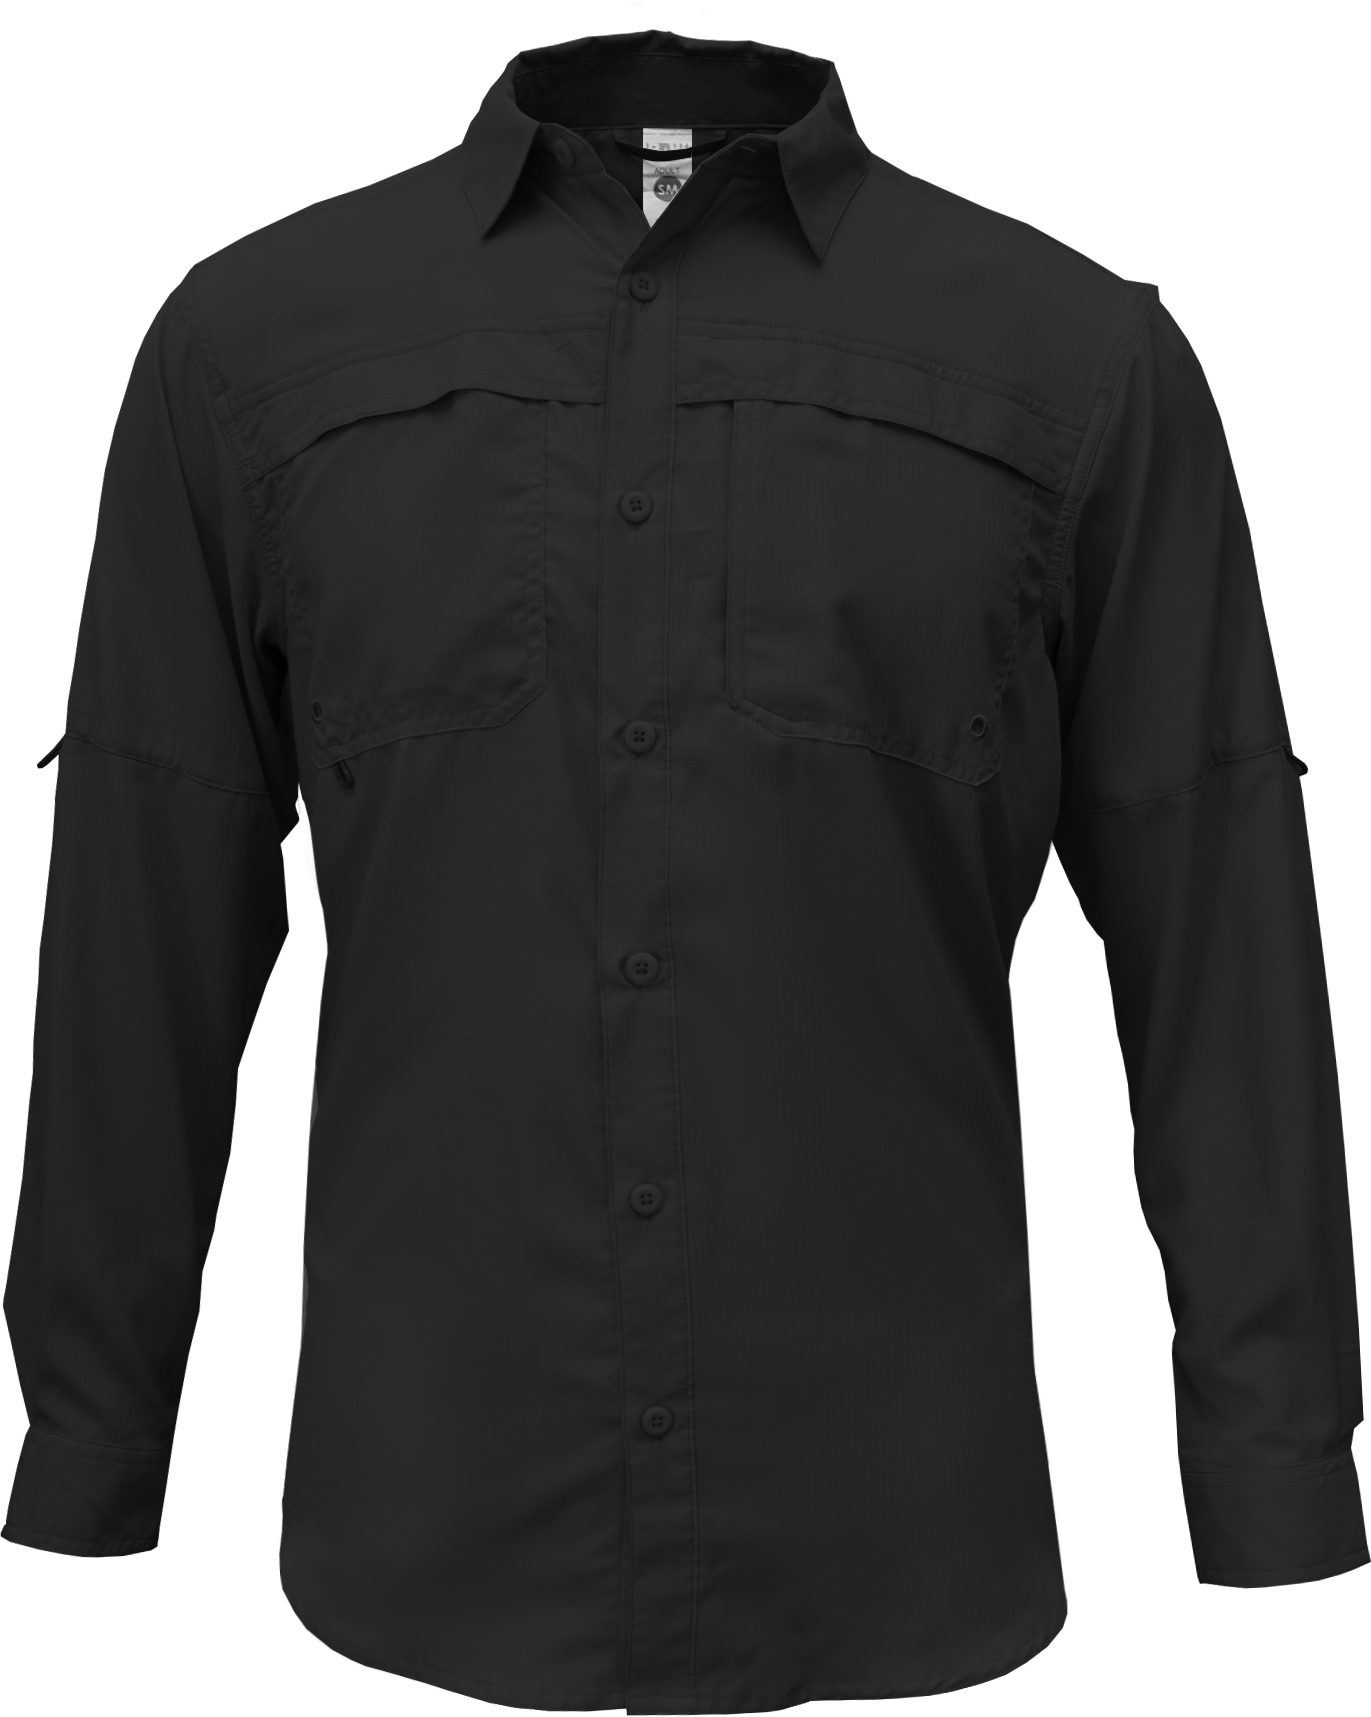 BAW Athletic Wear 3000 Adult Long Sleeve Fishing Shirt Black